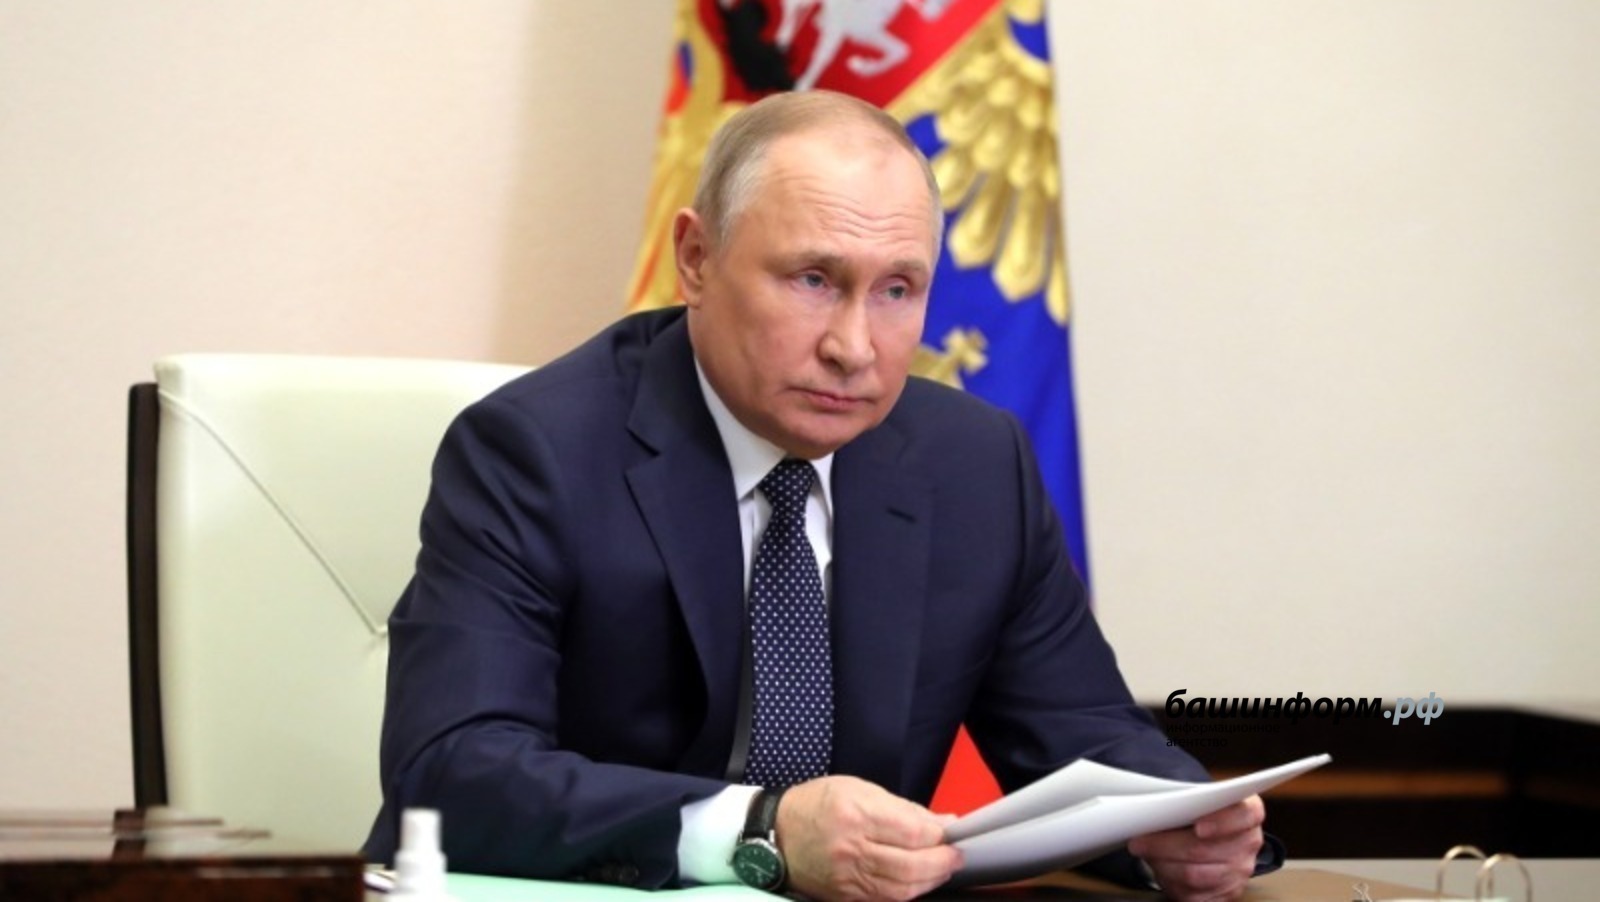 Президенту Владимиру Путину доверяют 80,9 процента россиян - ВЦИОМ